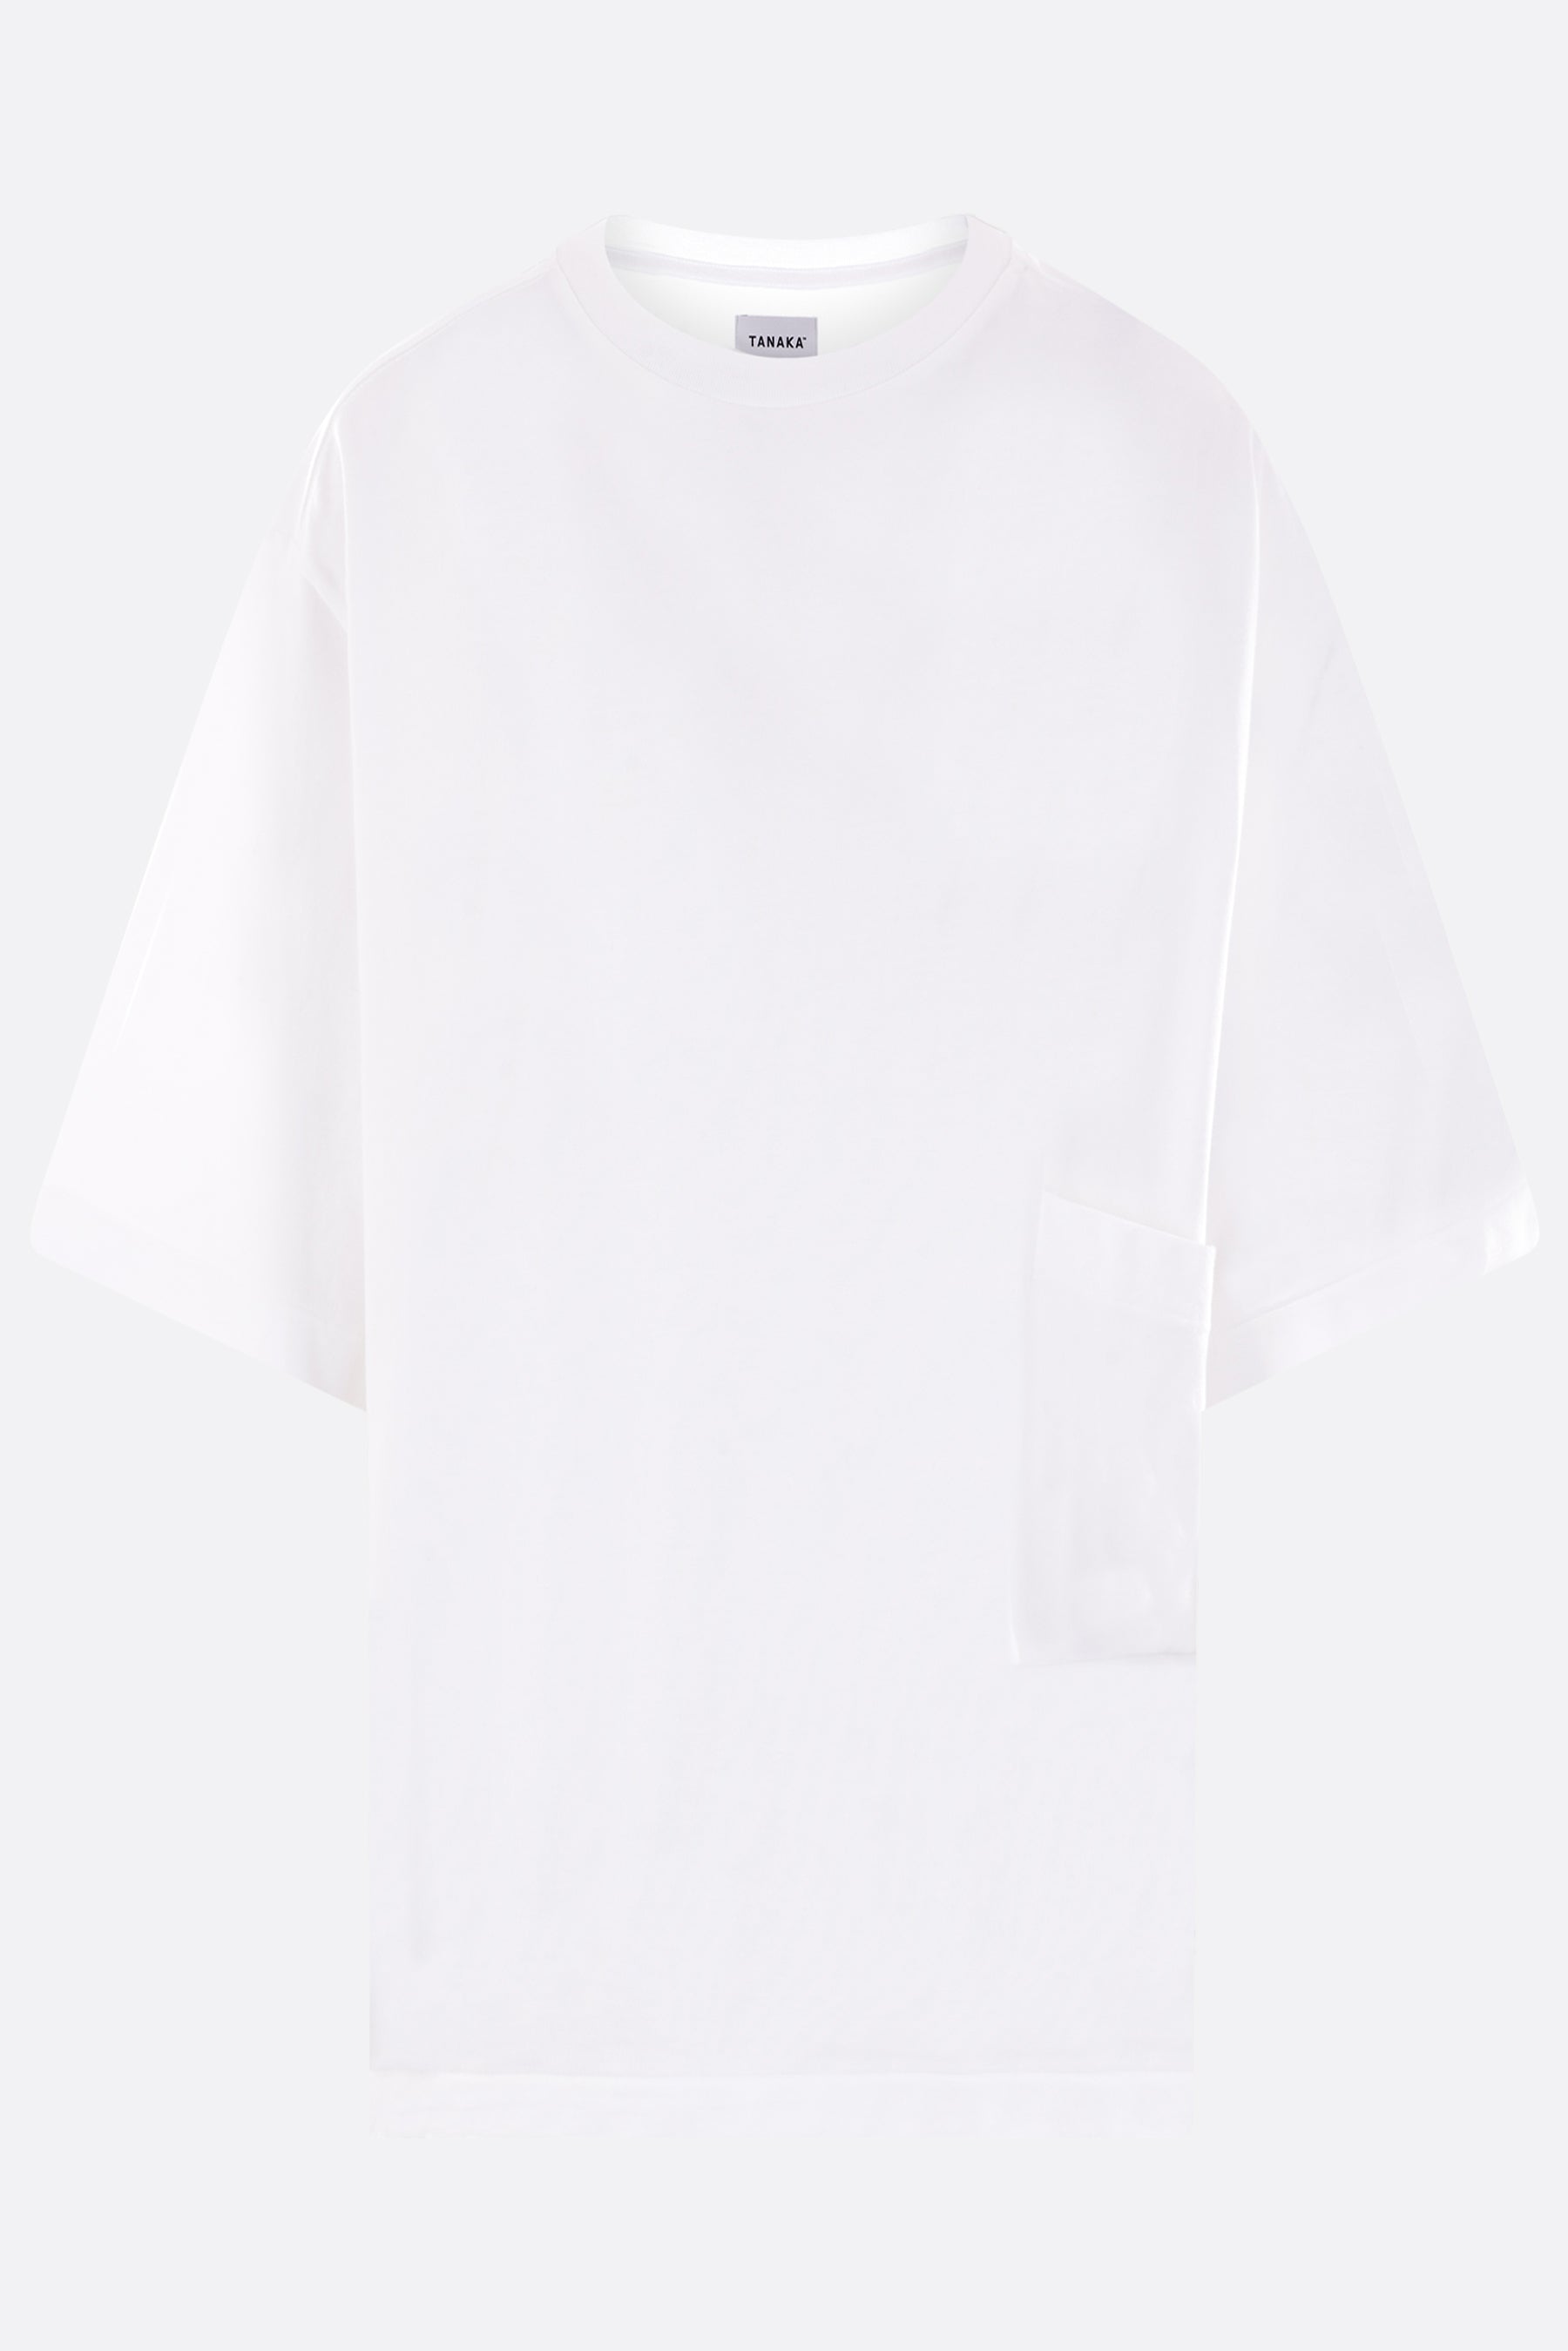 The Boxy Tee cotton oversized t-shirt